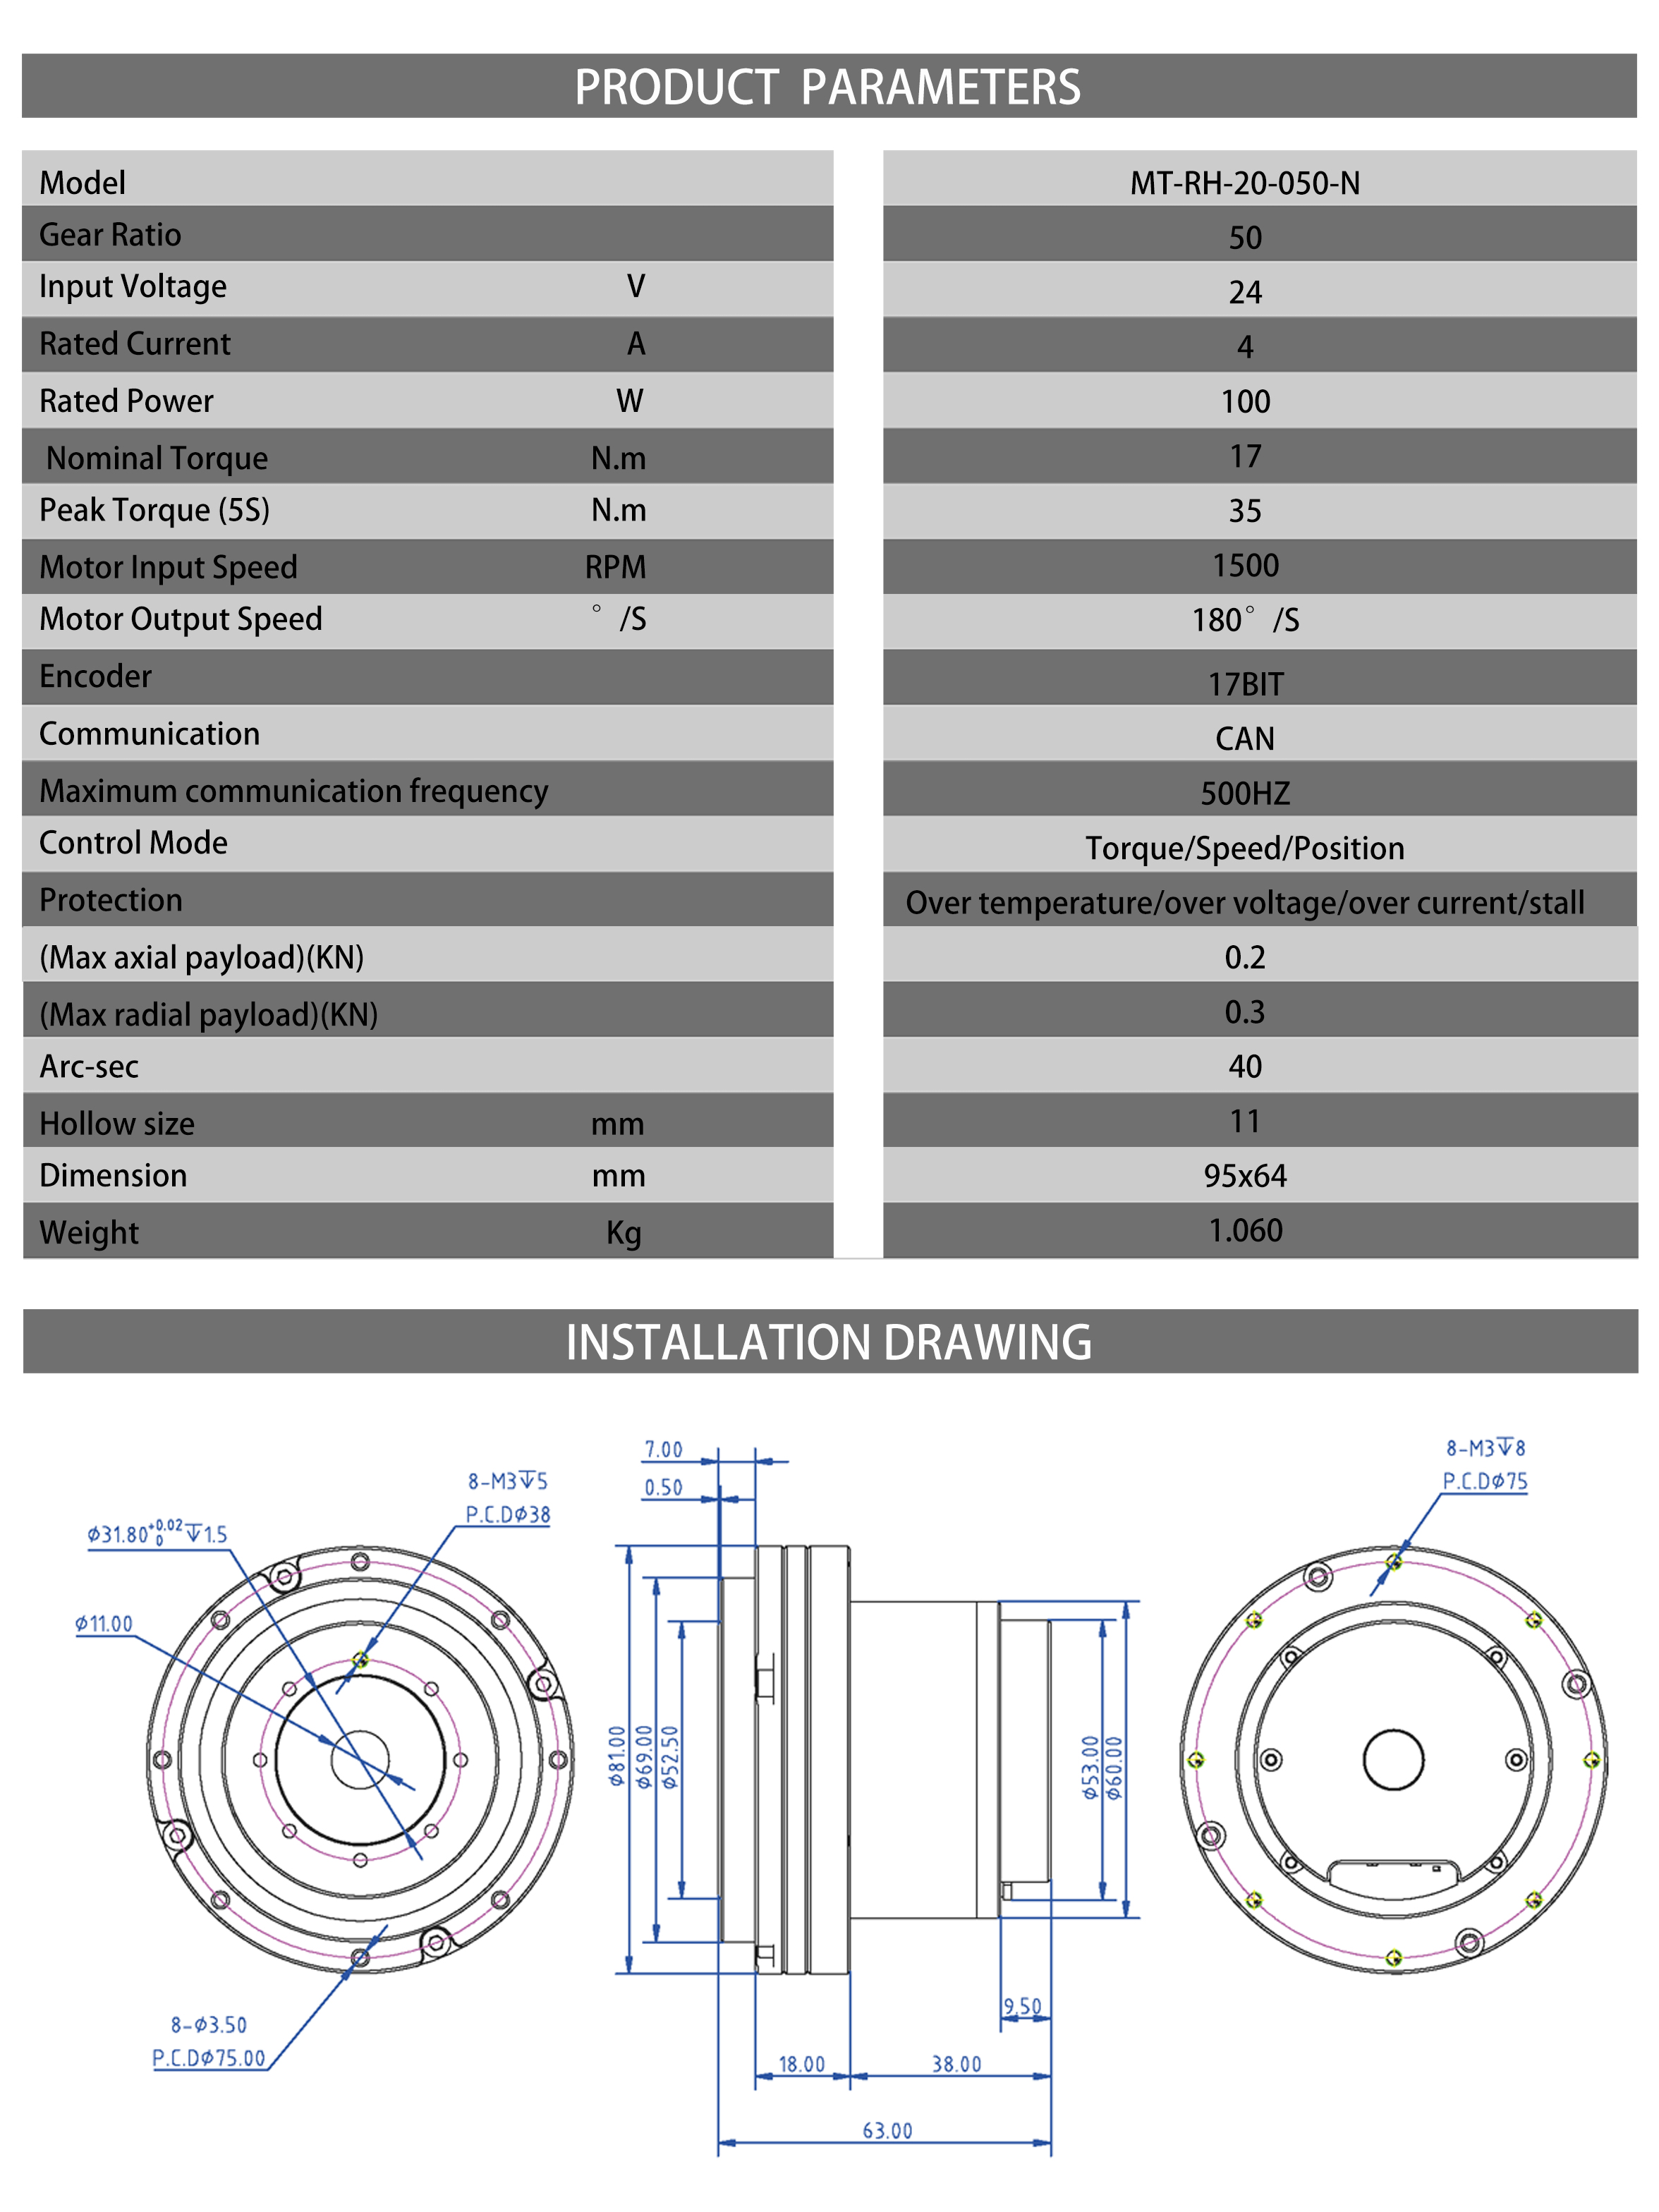 MT-RH-20-050-N Series Hollow shaft motor Harmonic drive reducer 100 to 1 actuator